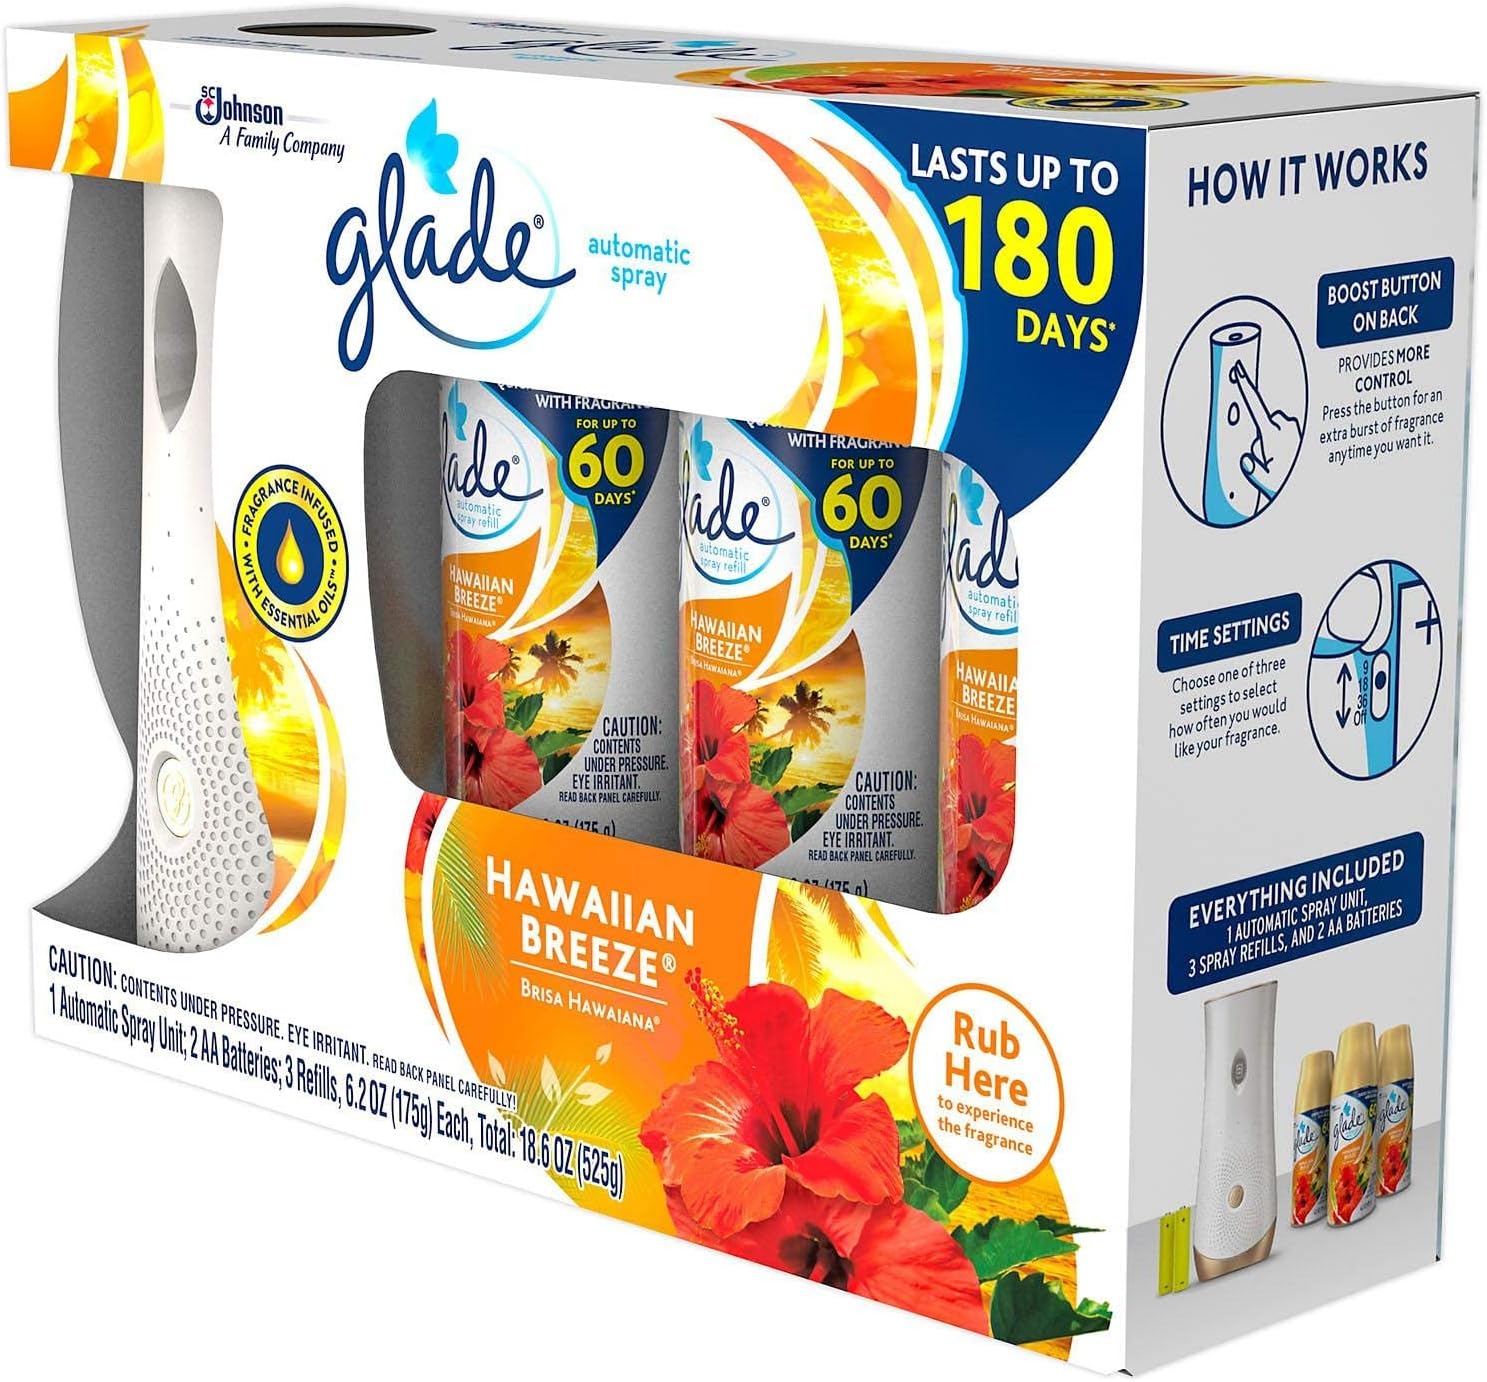 Glade Automatic Spray Air Freshener 1 Holder + 3 Refills - Hawaiian Breeze : Health & Household